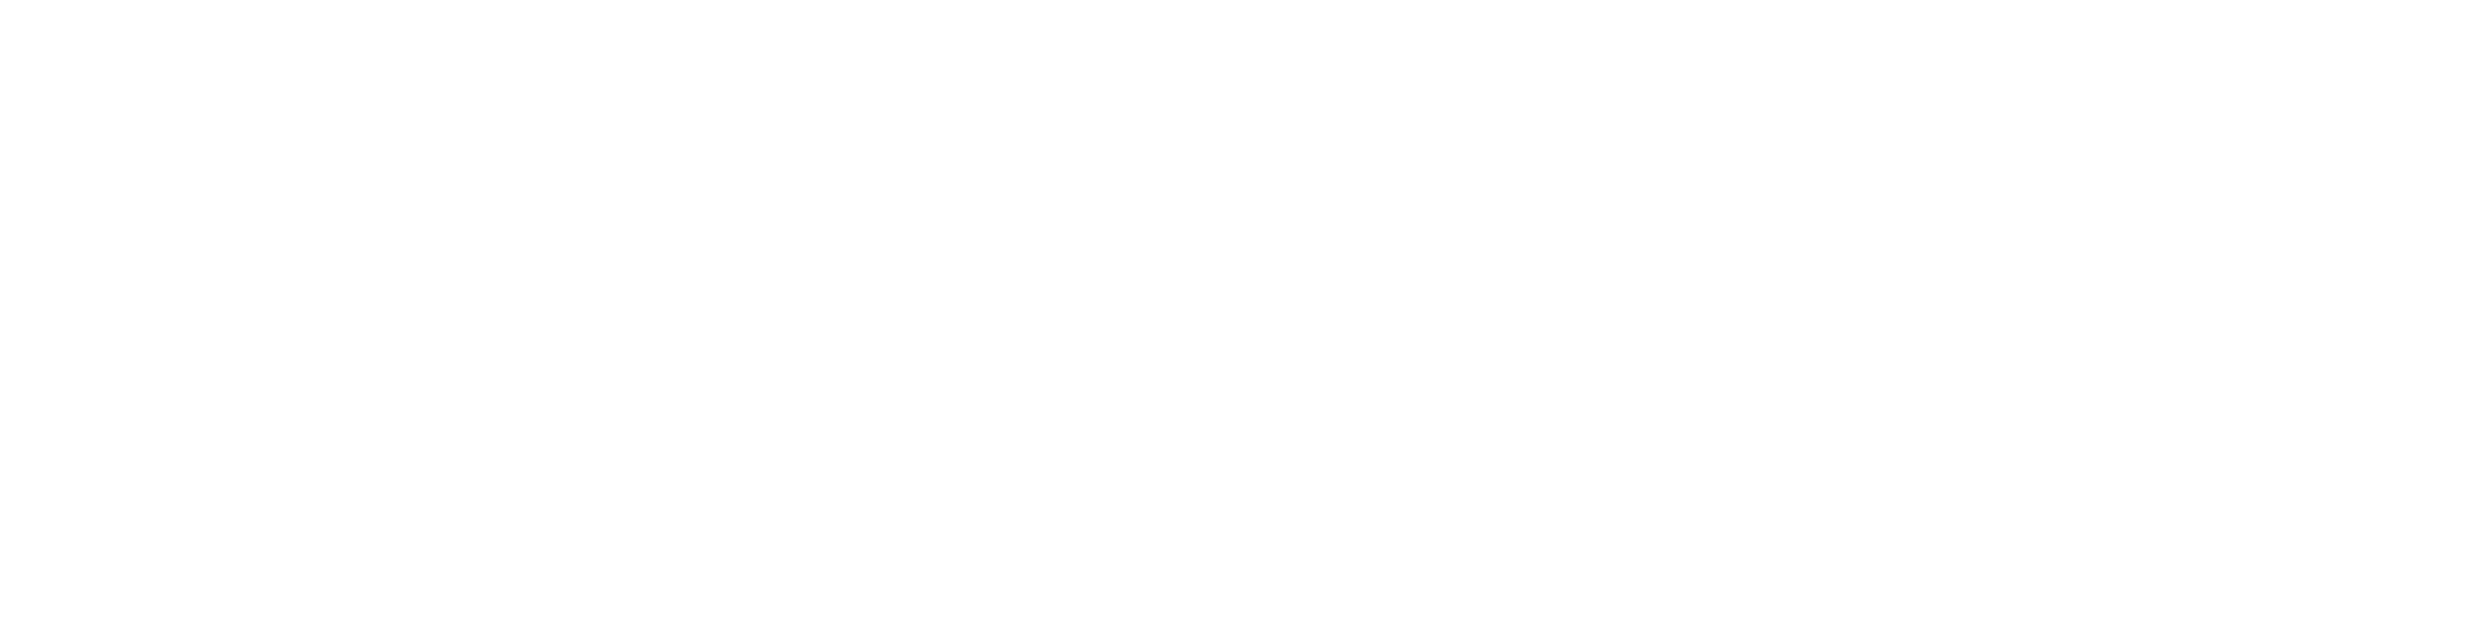 Coastal Properties Group International